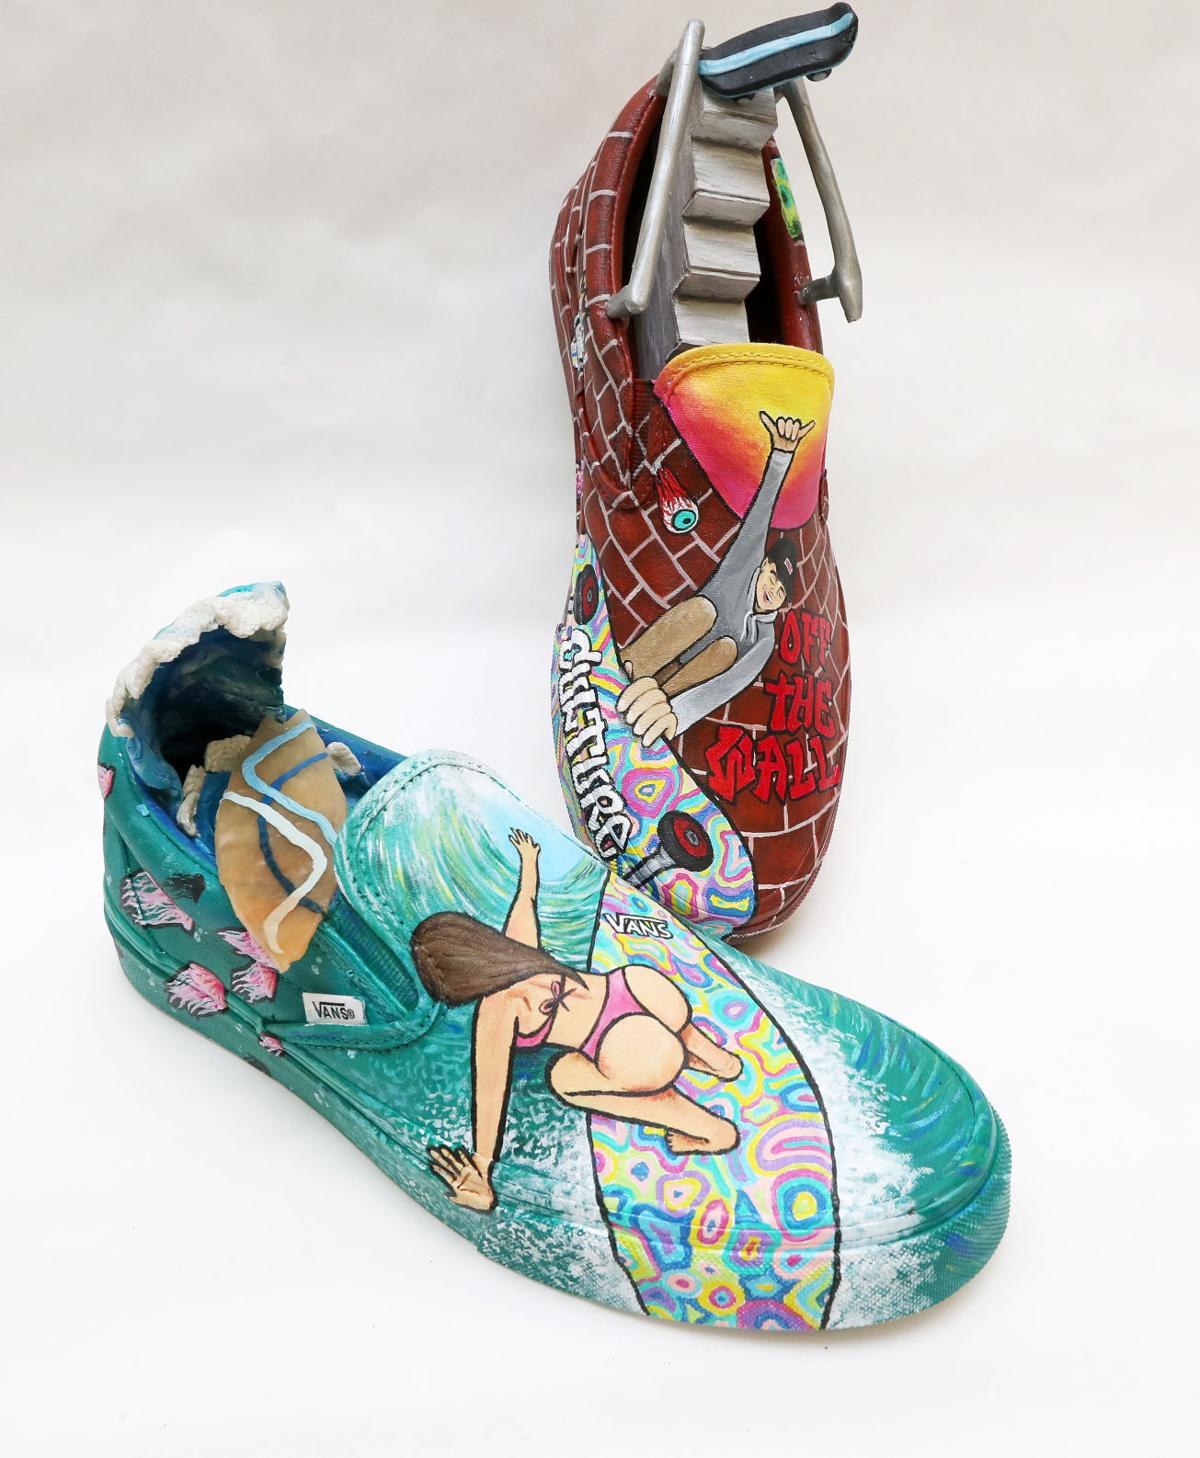 Pol med tiden Krav Middle Township High School a finalist in Vans shoe design contest |  Education | pressofatlanticcity.com